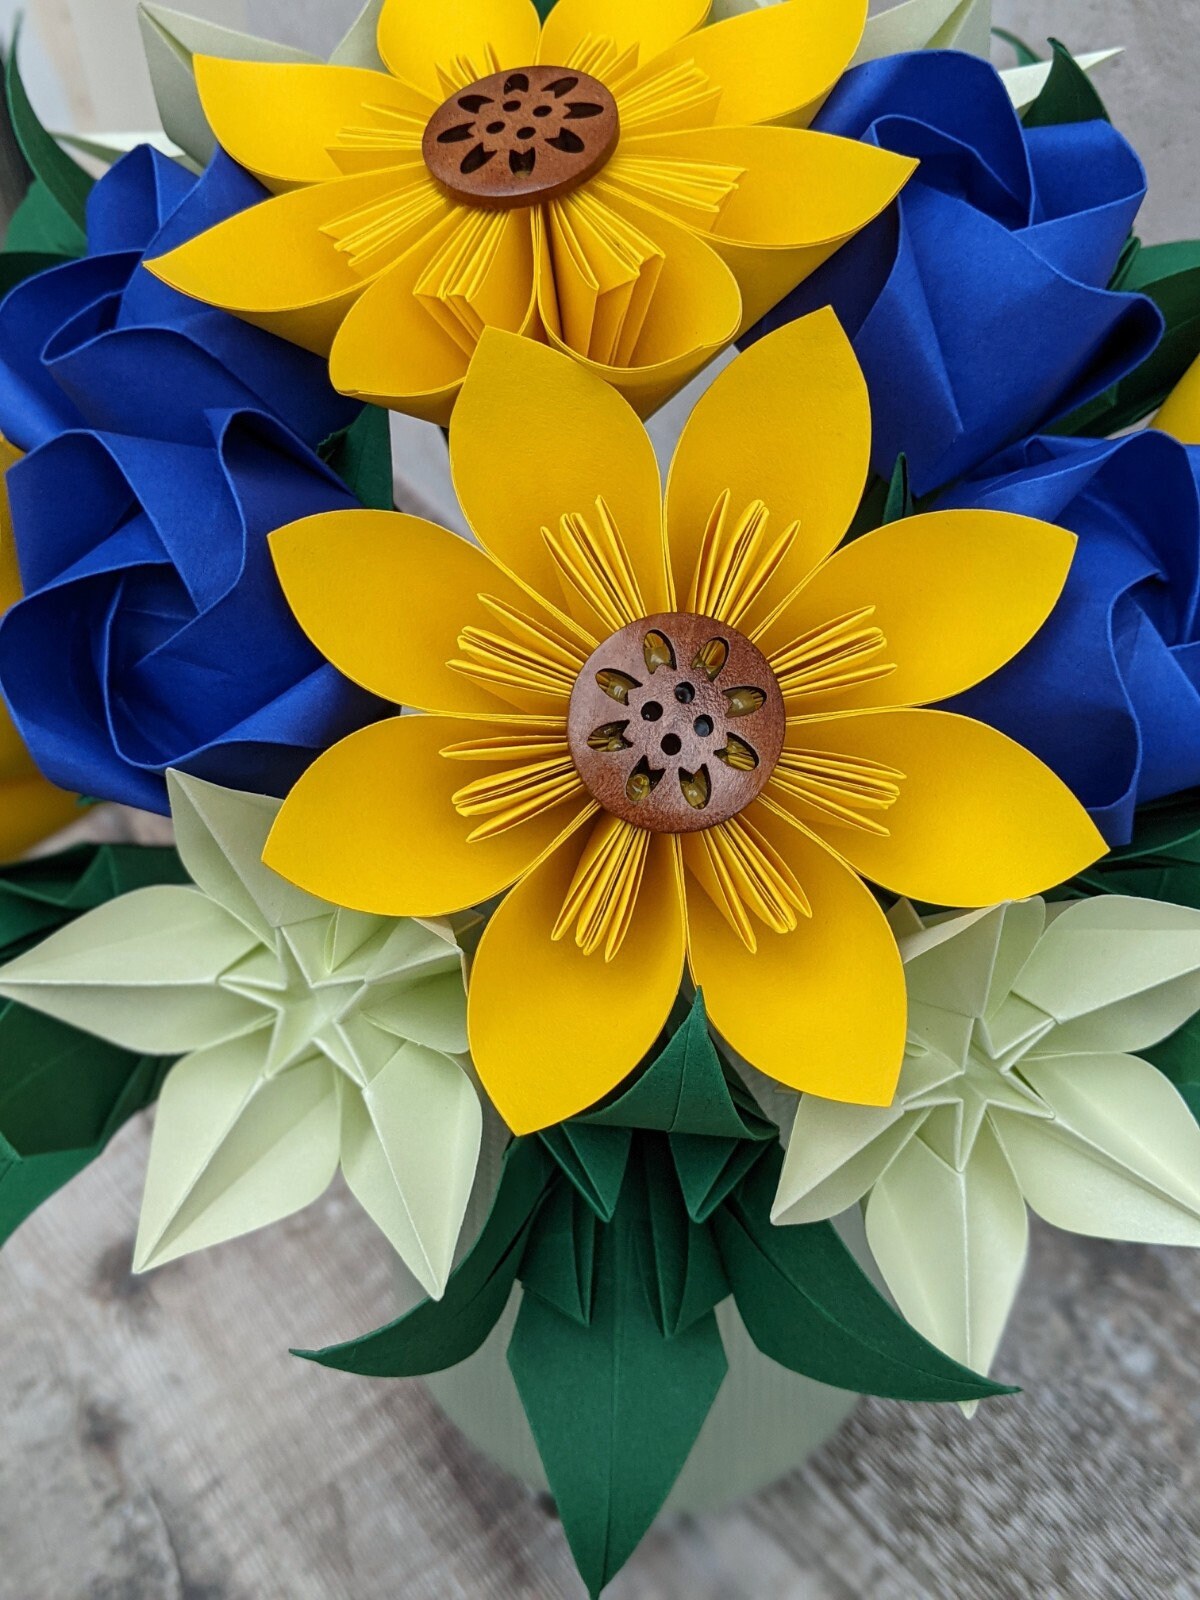 Origami wedding bouquet with sunflowers, alternative bridal flowers